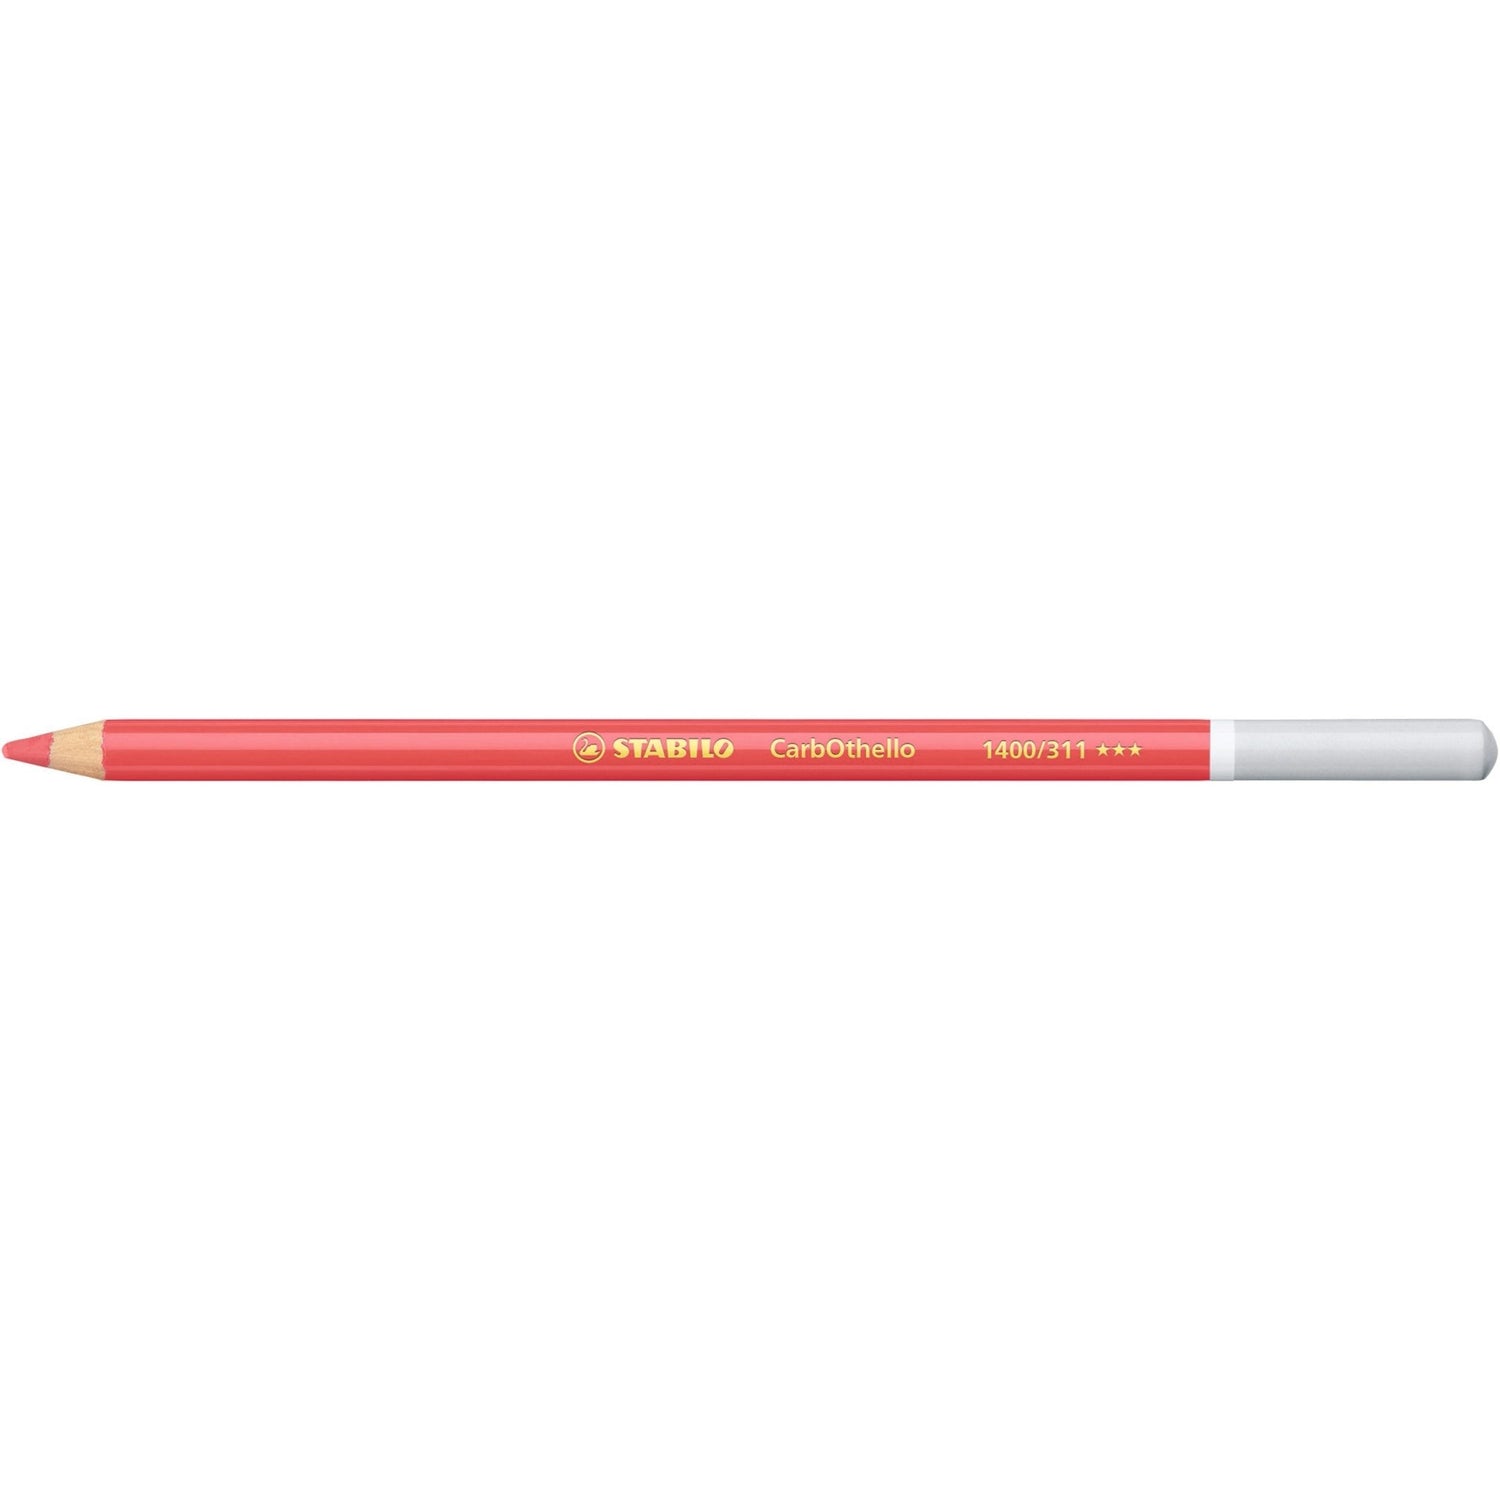 Stabilo CarbOthello Coloured Pastel Pencil 311 Carmine Red Middle - theartshop.com.au